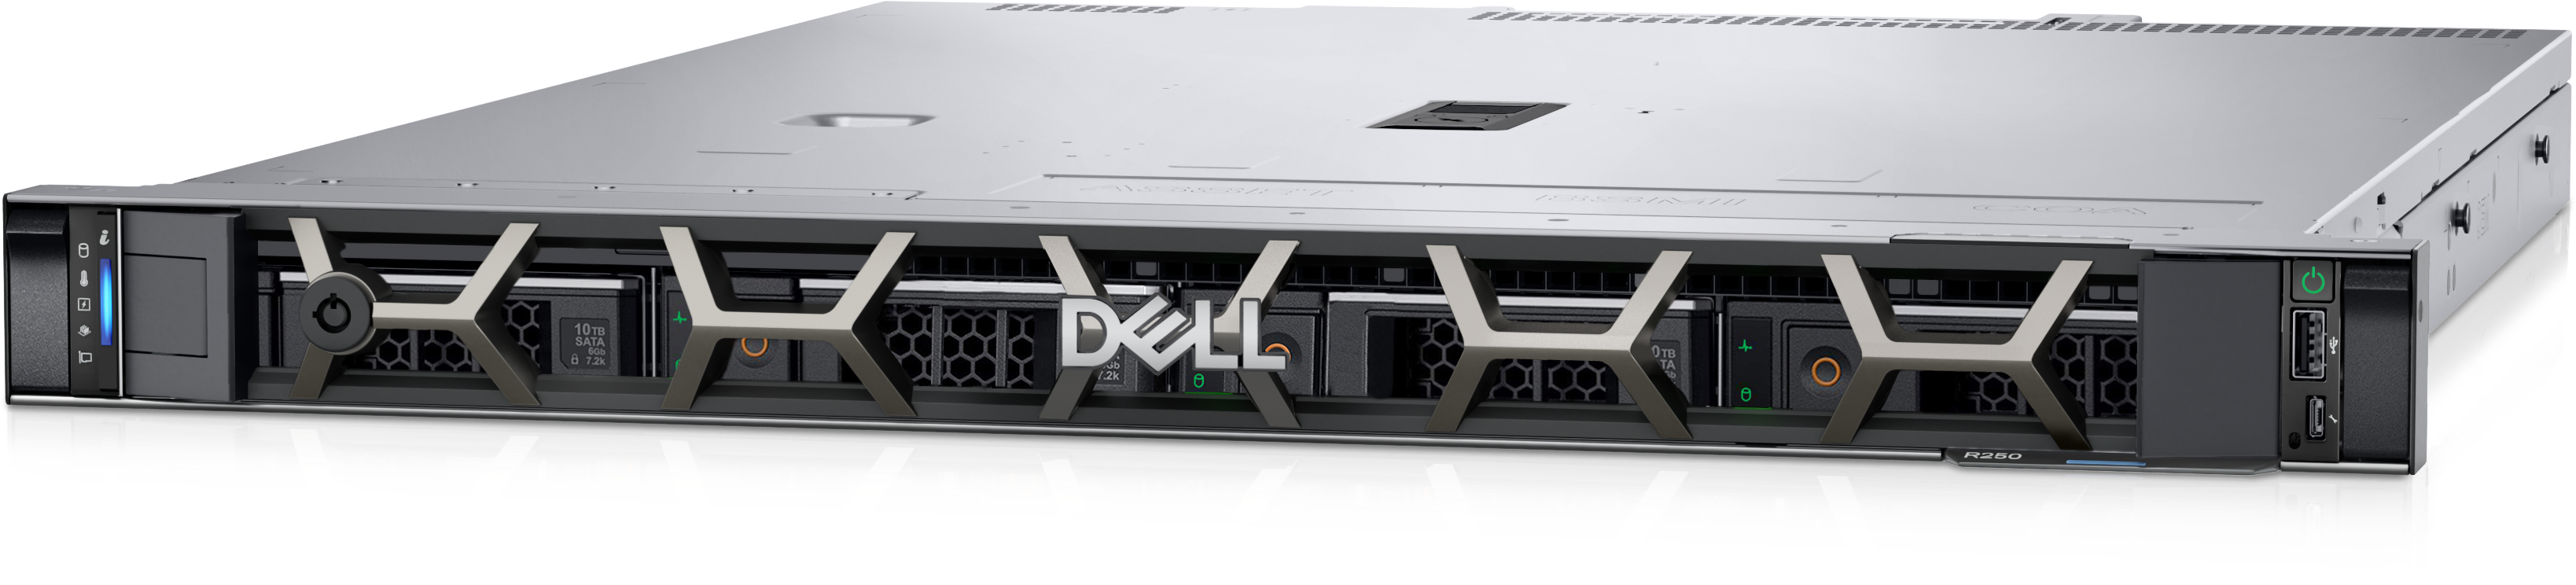 PowerEdge R250 Rack Server | Dell USA